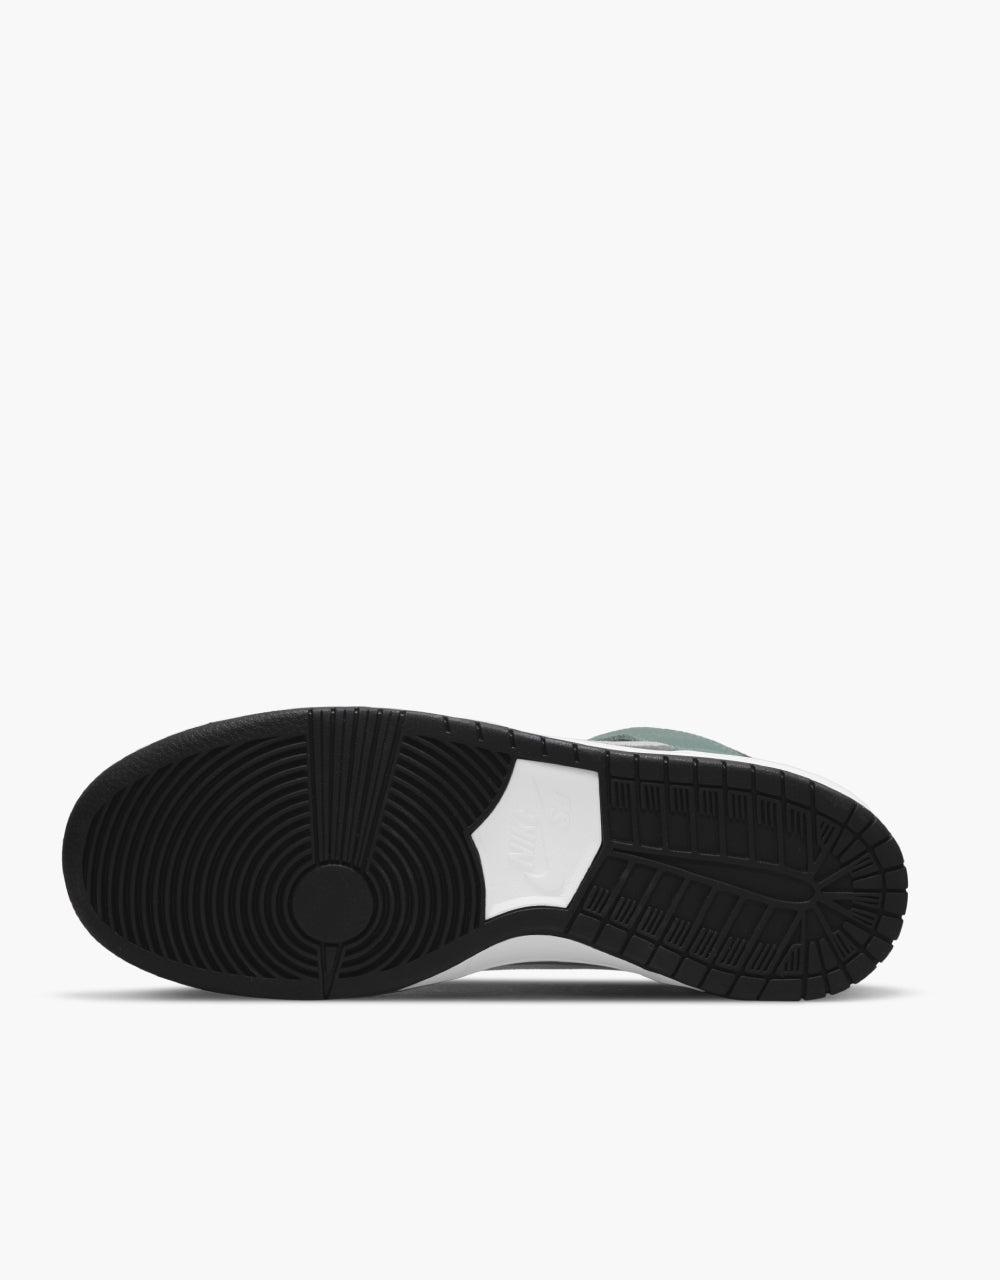 Nike SB 'Mineral Slate' Dunk High Pro Skate Shoes